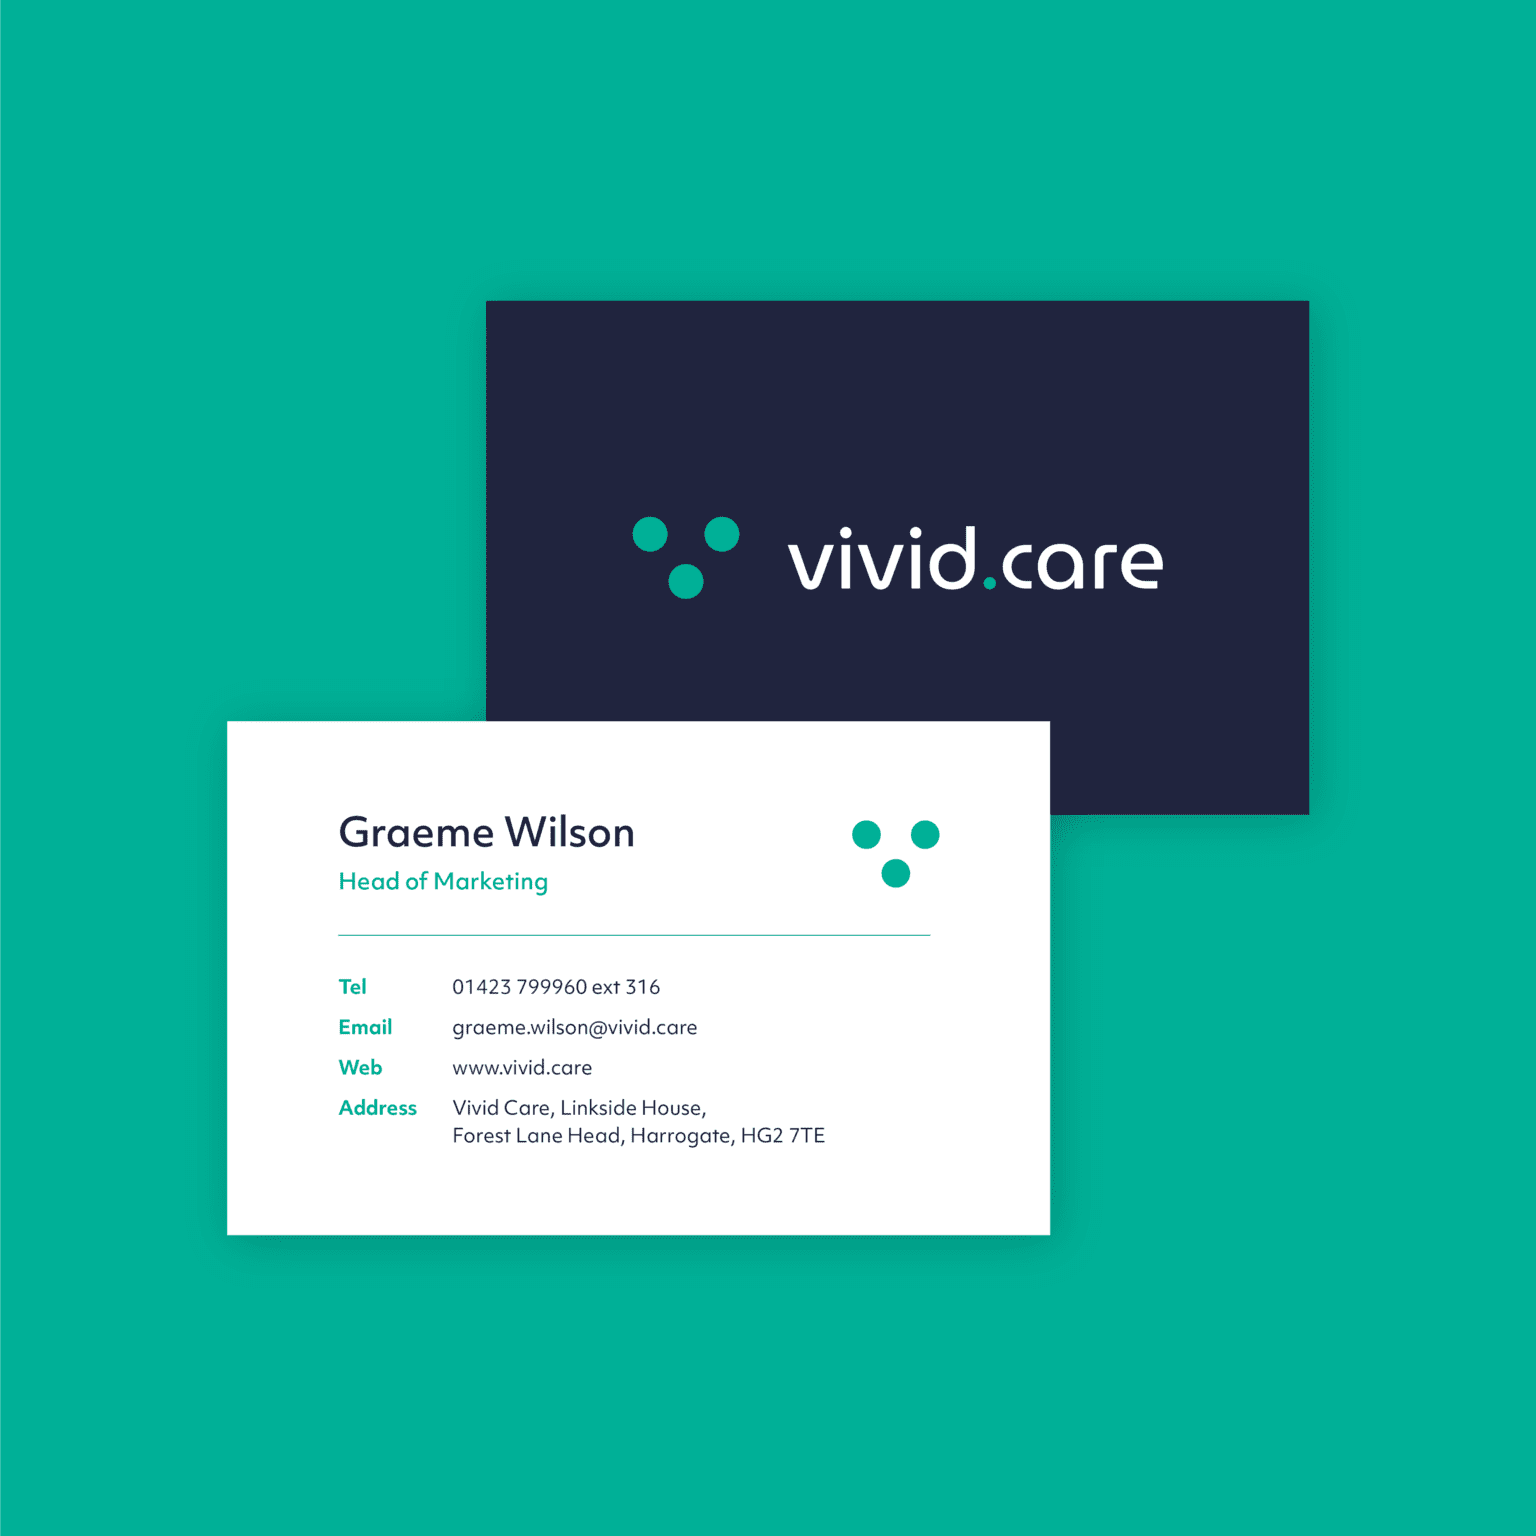 Vivid Care website by Bluestone98